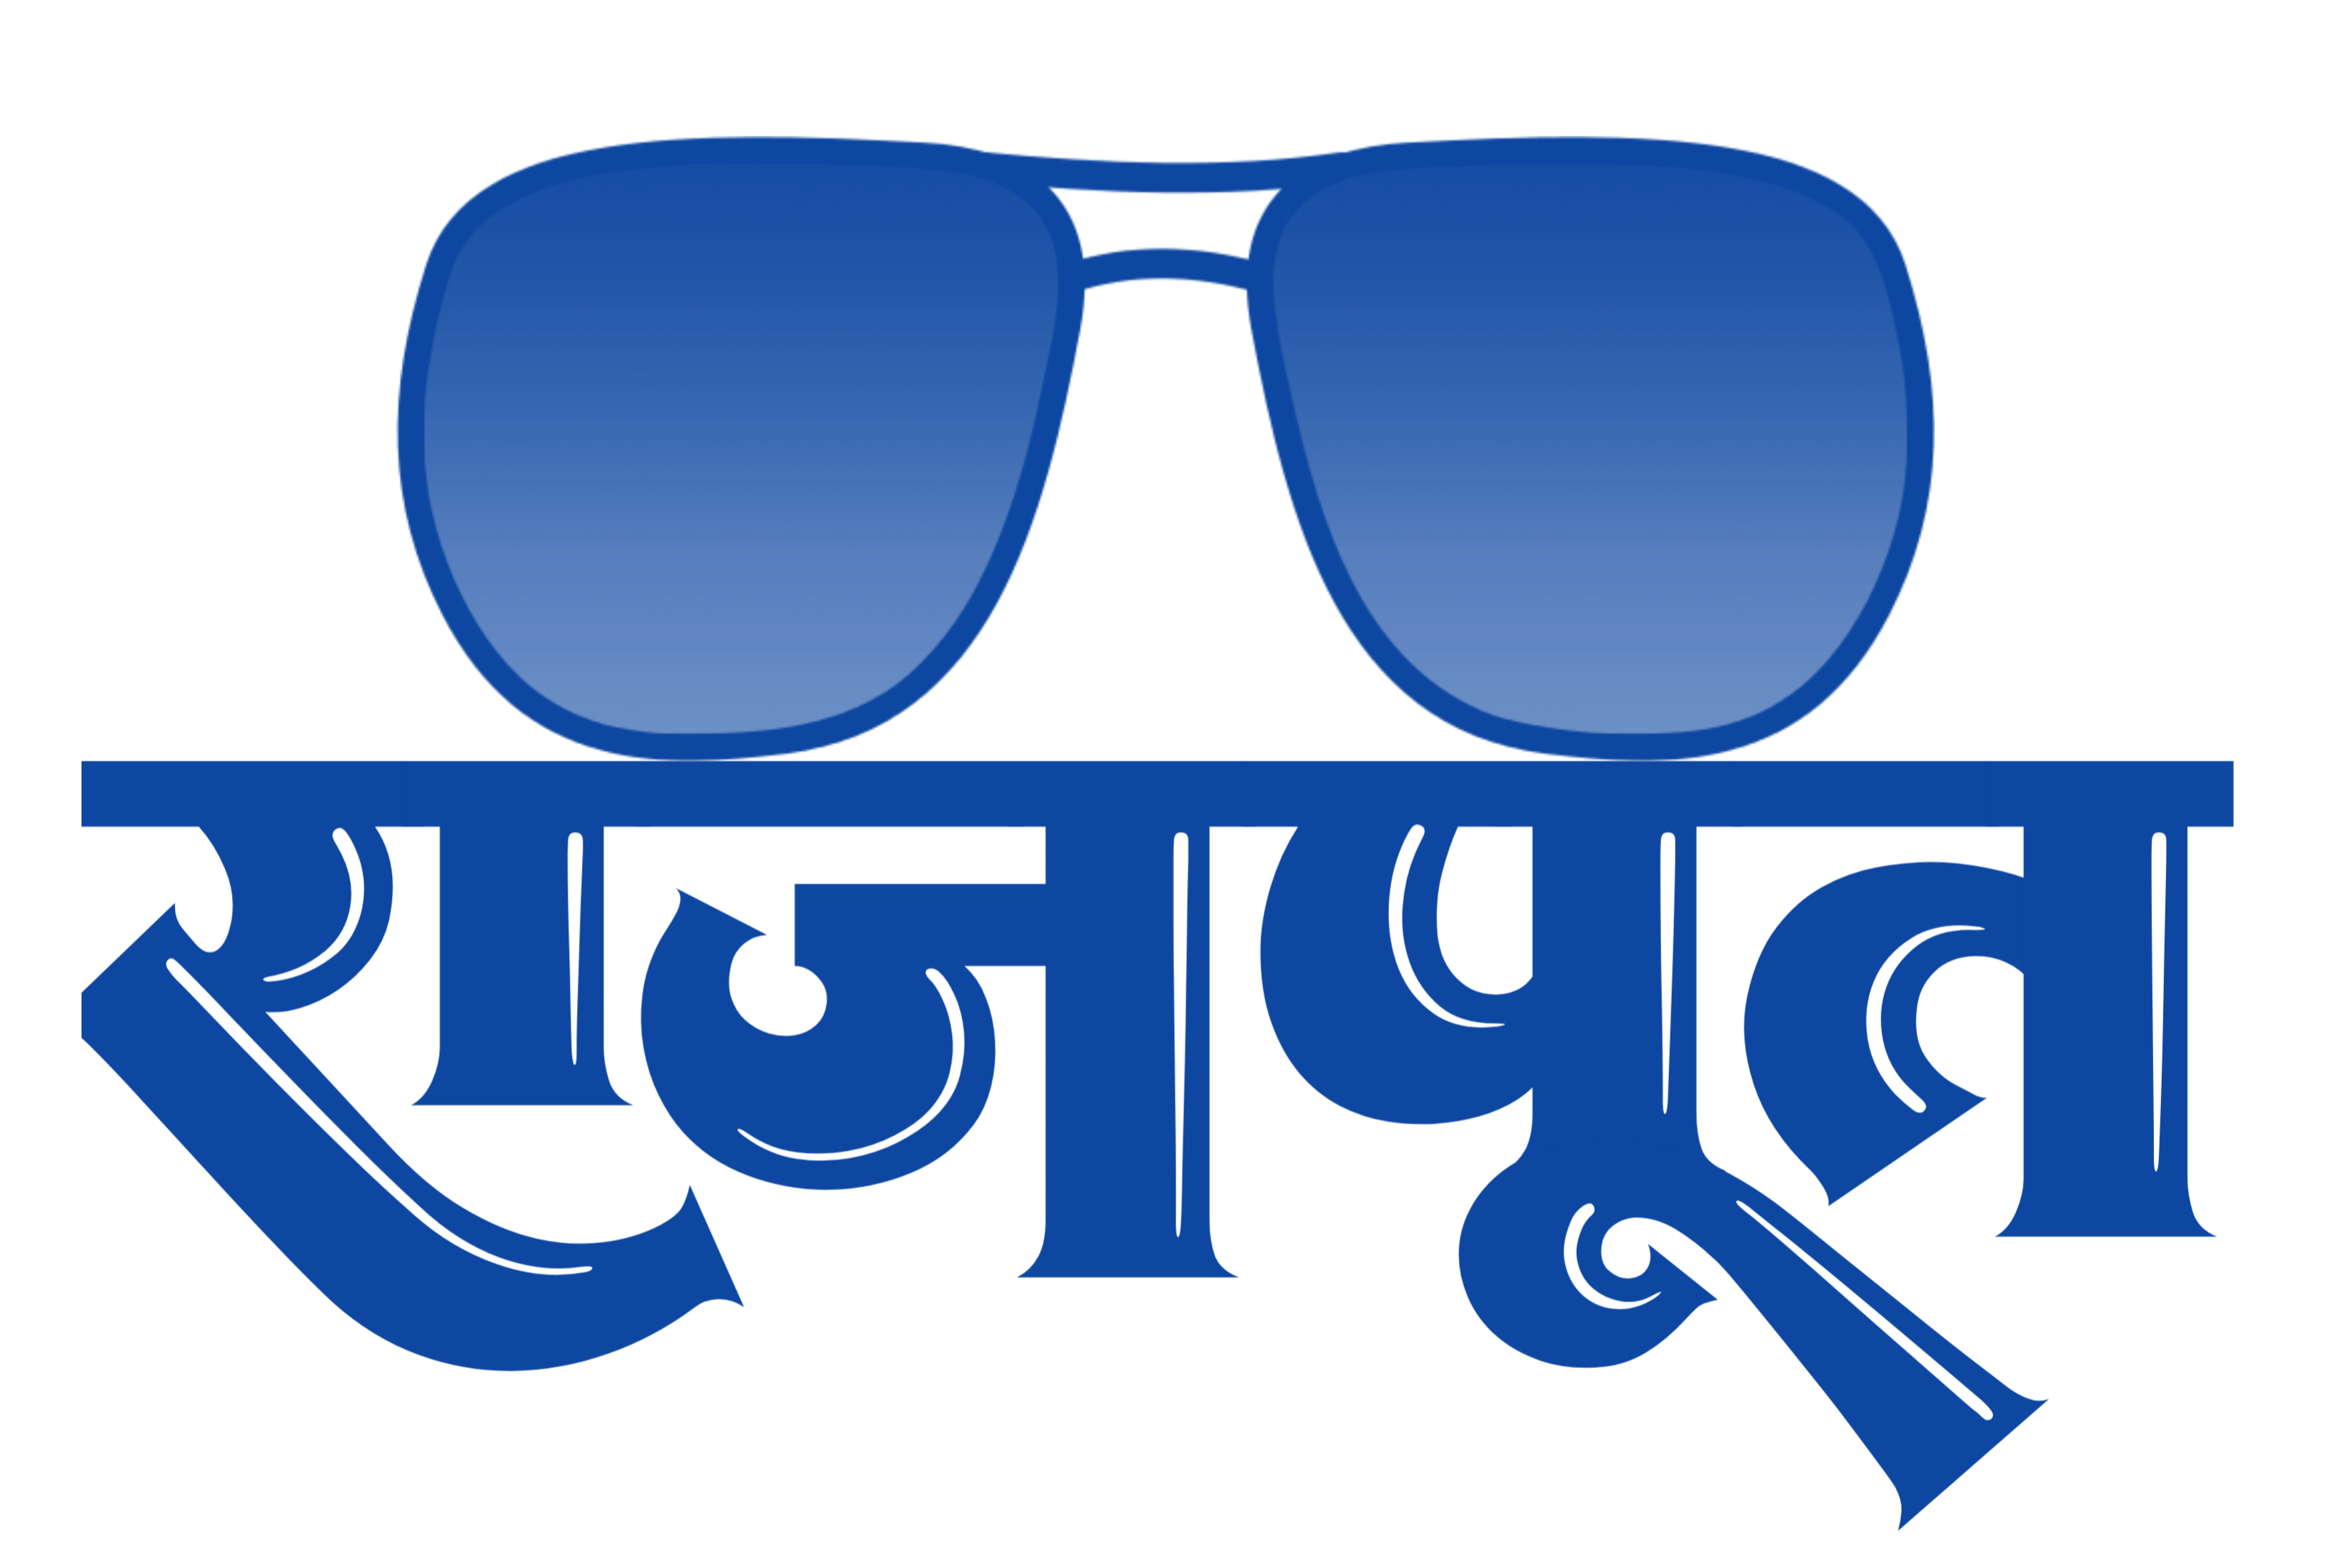 Indian Rajput Or Rajputana Religious Logo Of Ranbanka Rathore Chouhan.  Royalty Free SVG, Cliparts, Vectors, and Stock Illustration. Image  170058510.